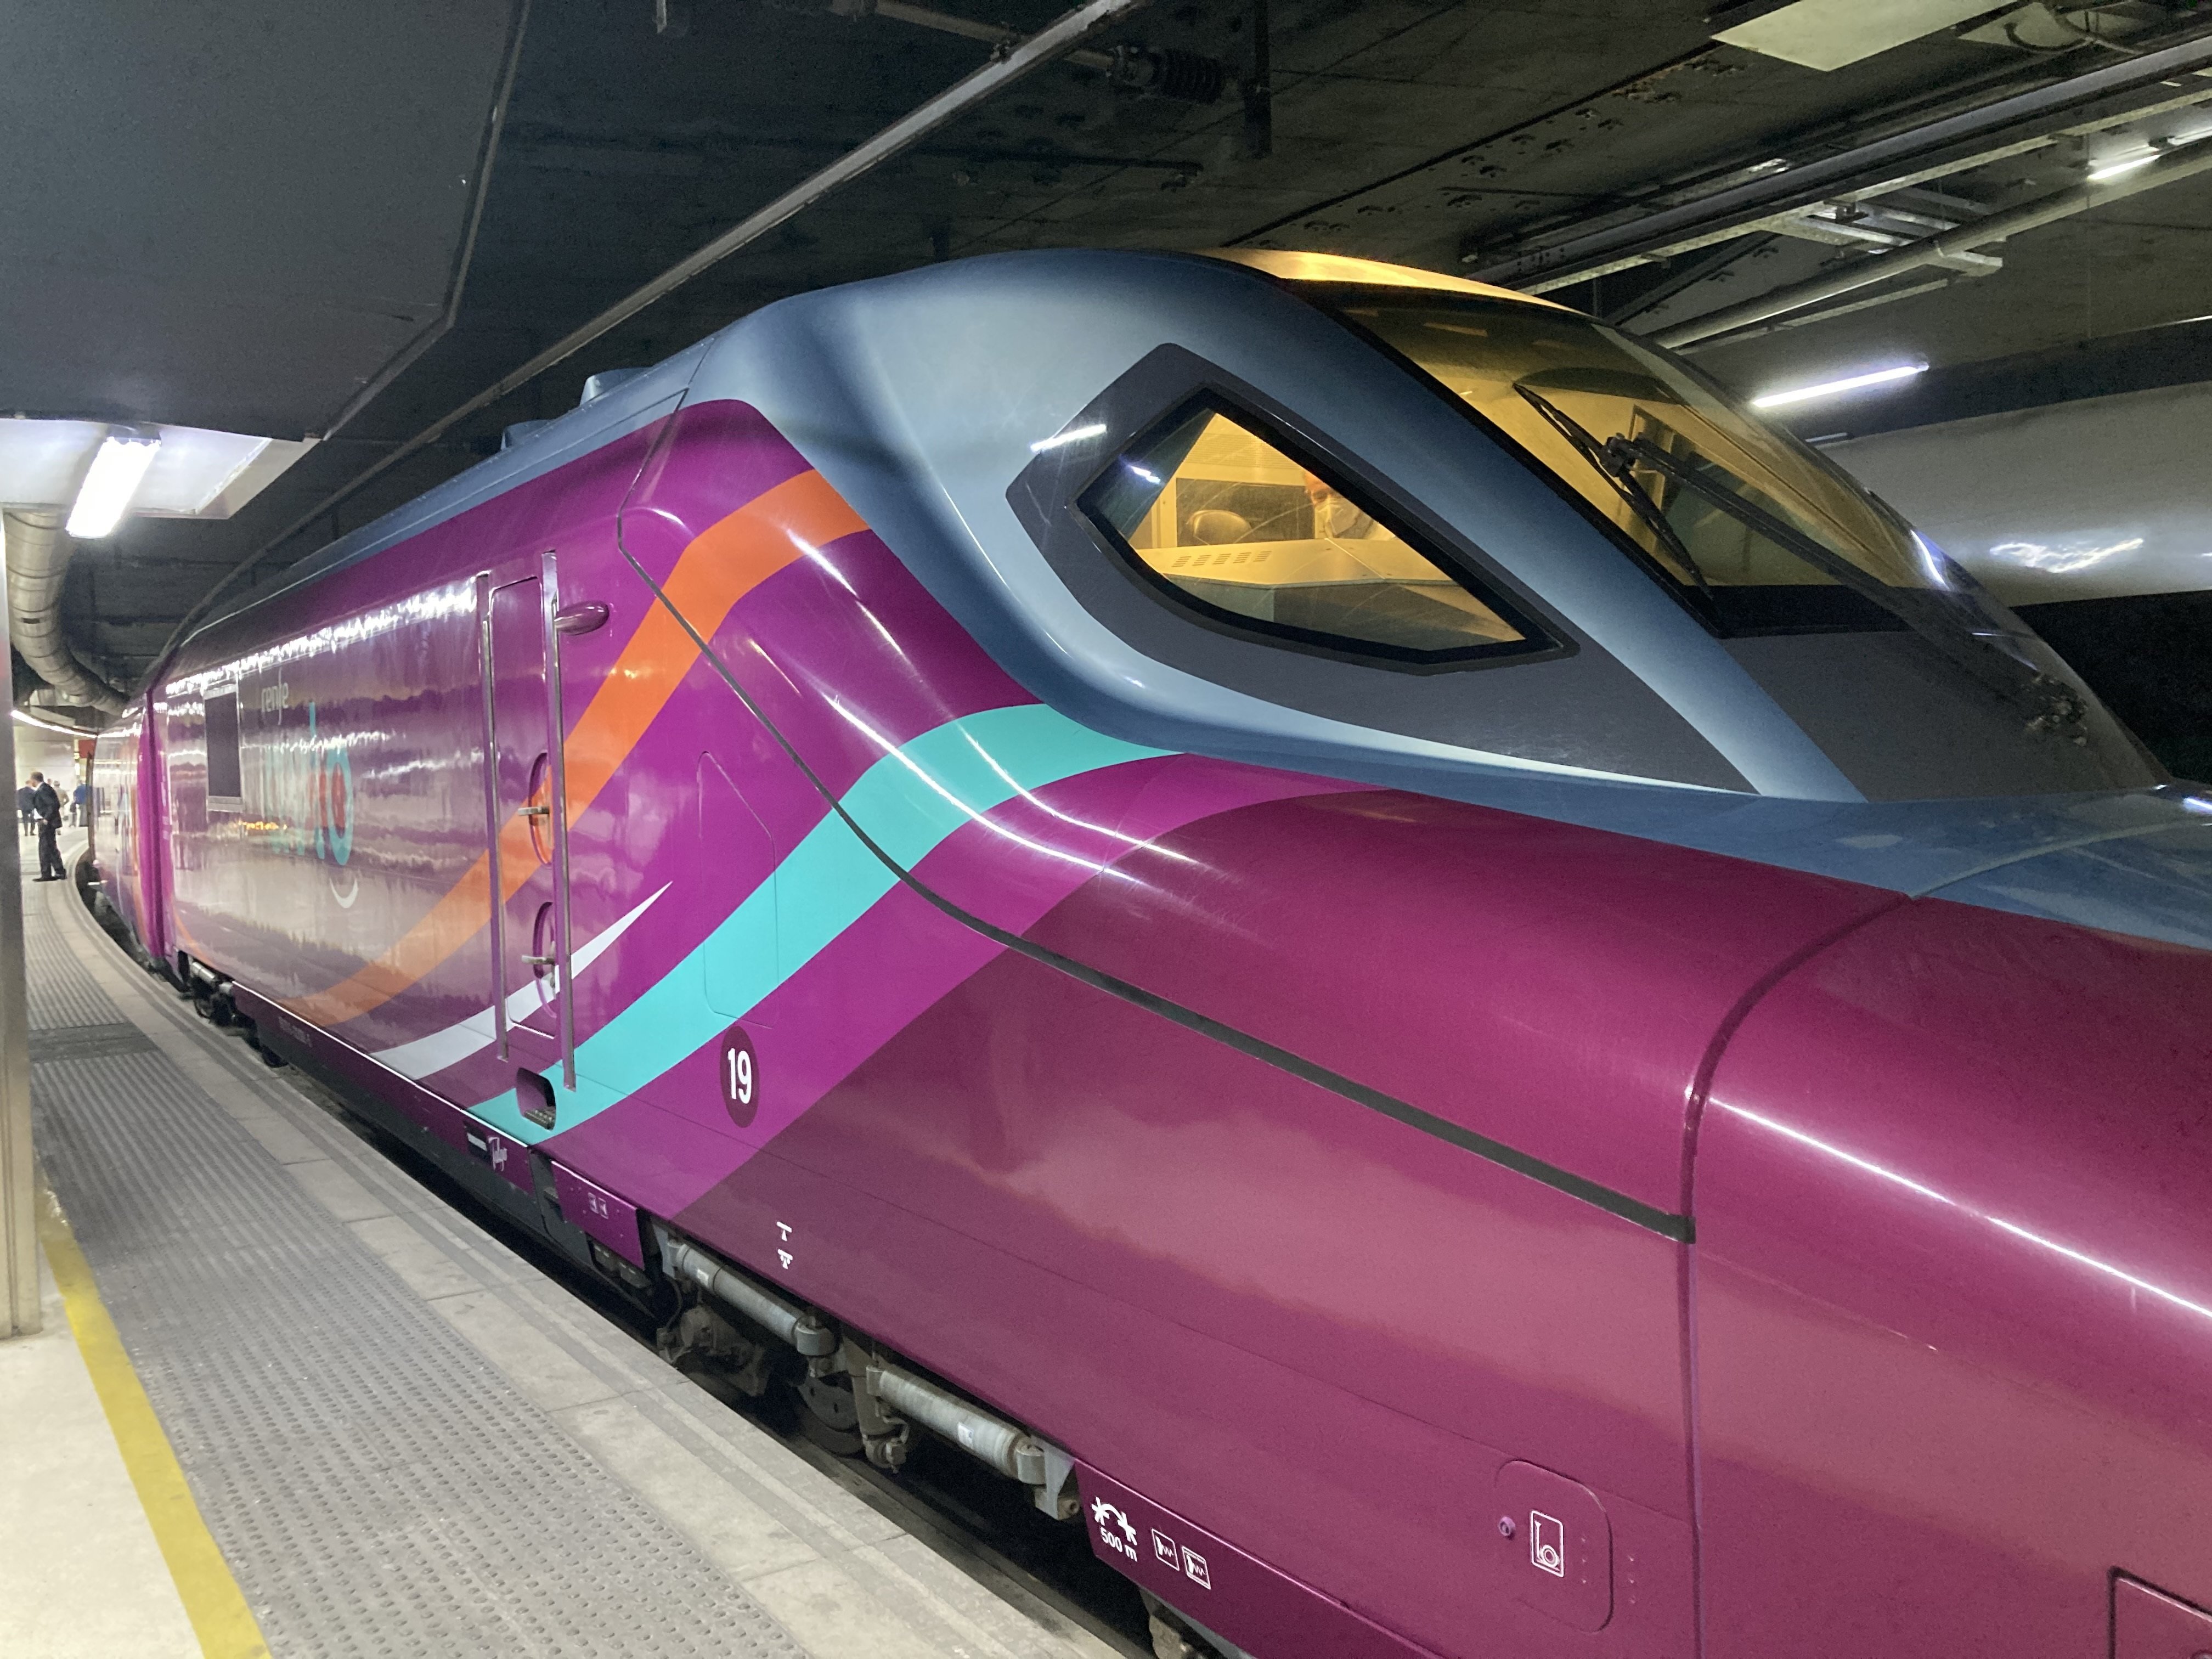 EuropaPress 3706407 tren avlo estacion sants barcelona viajes pruebas antes puesta